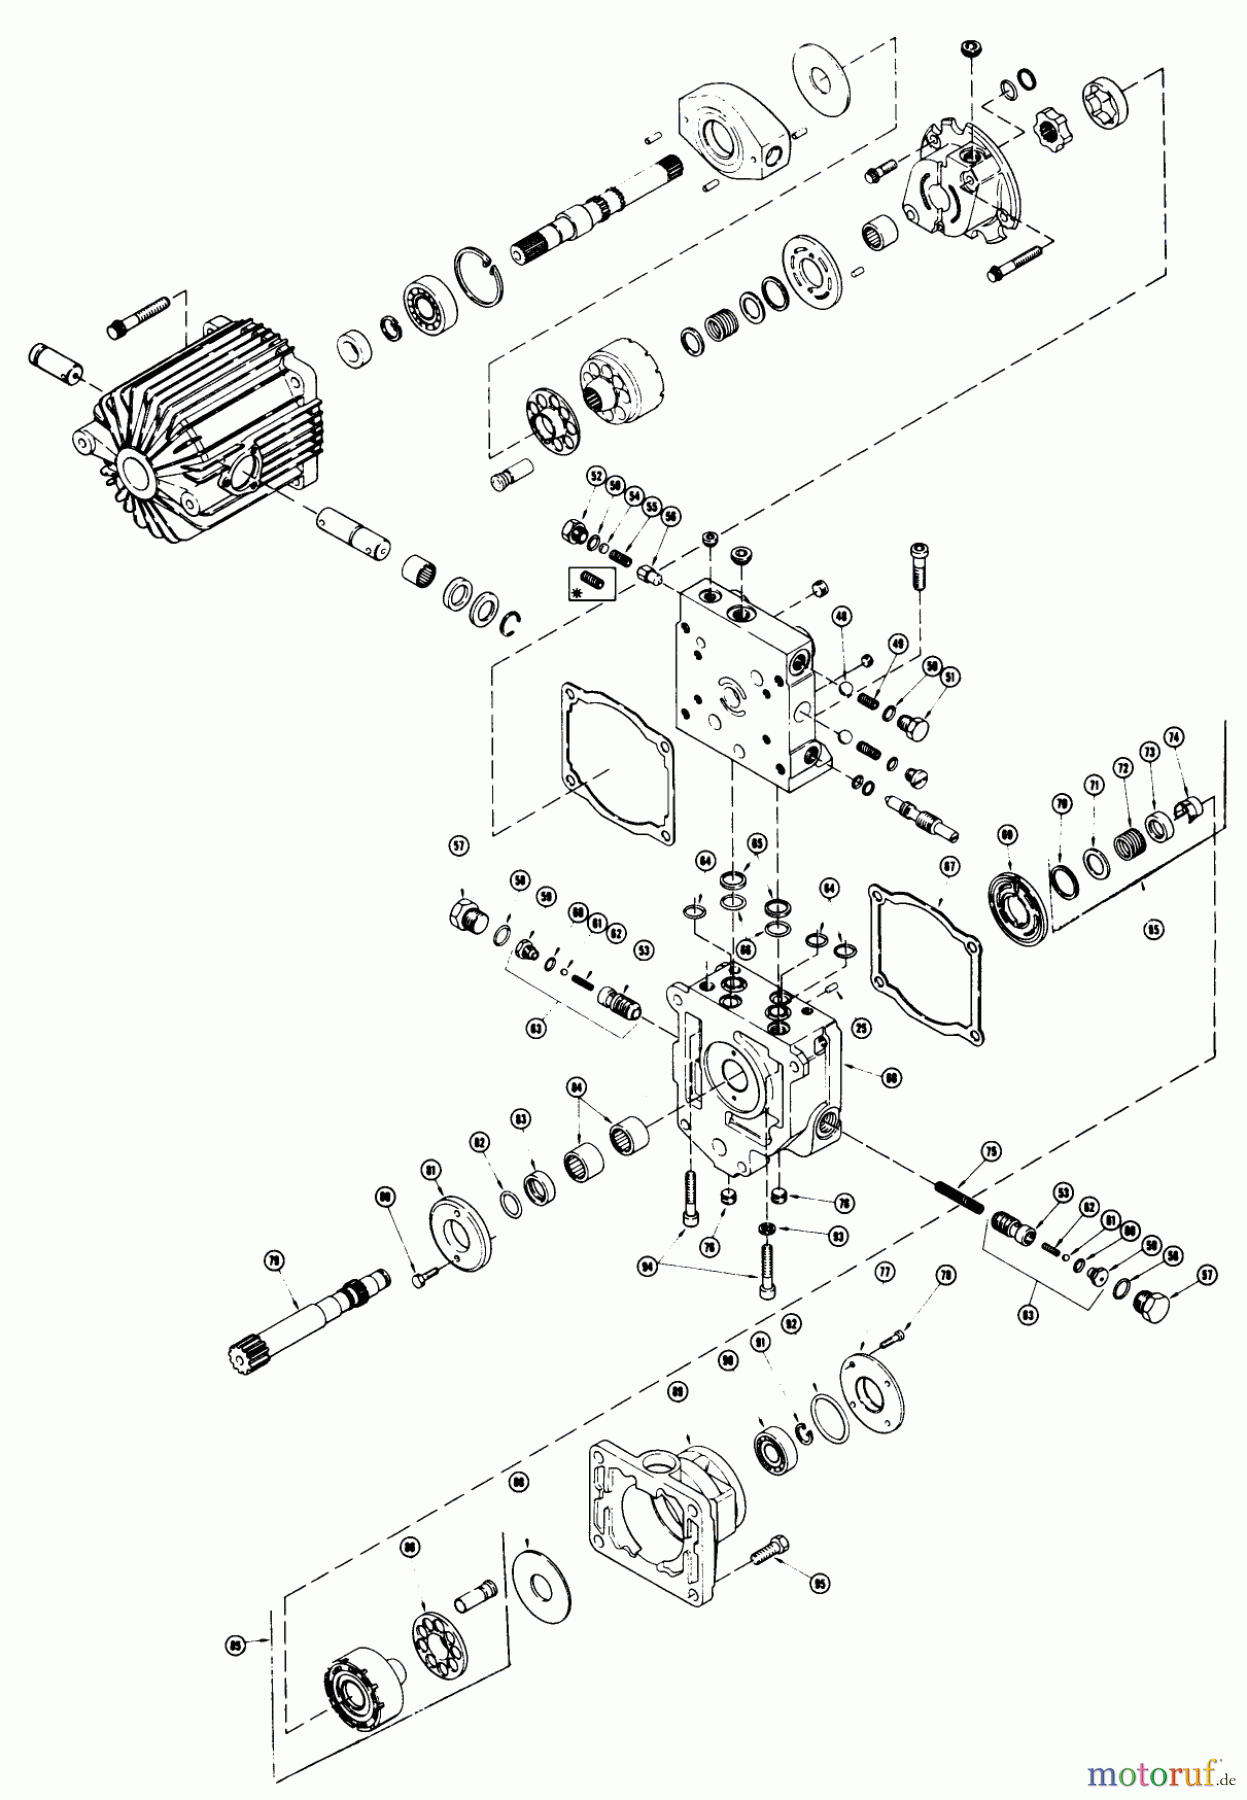  Toro Neu Mowers, Lawn & Garden Tractor Seite 1 71-12KS02 (C-120) - Toro C-120 Automatic Tractor, 1977 HYDROSTATIC TRANSMISSION #3